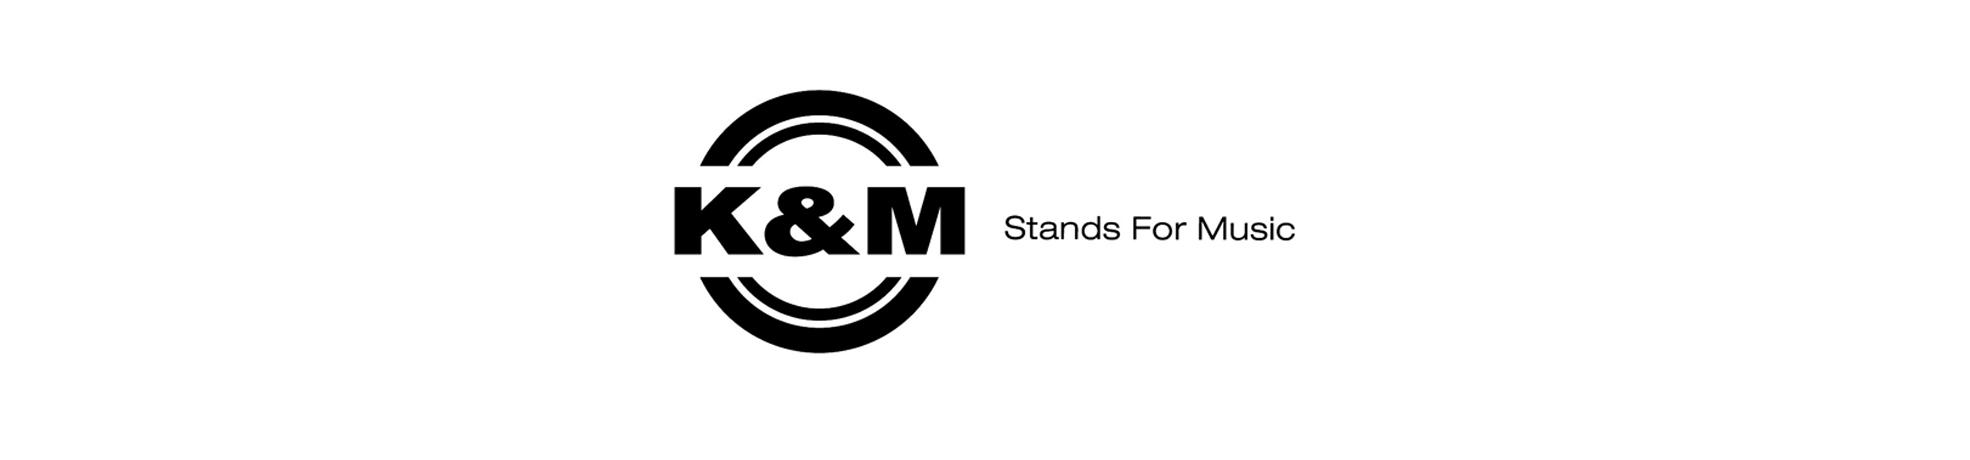 Music stands - Products - König & Meyer